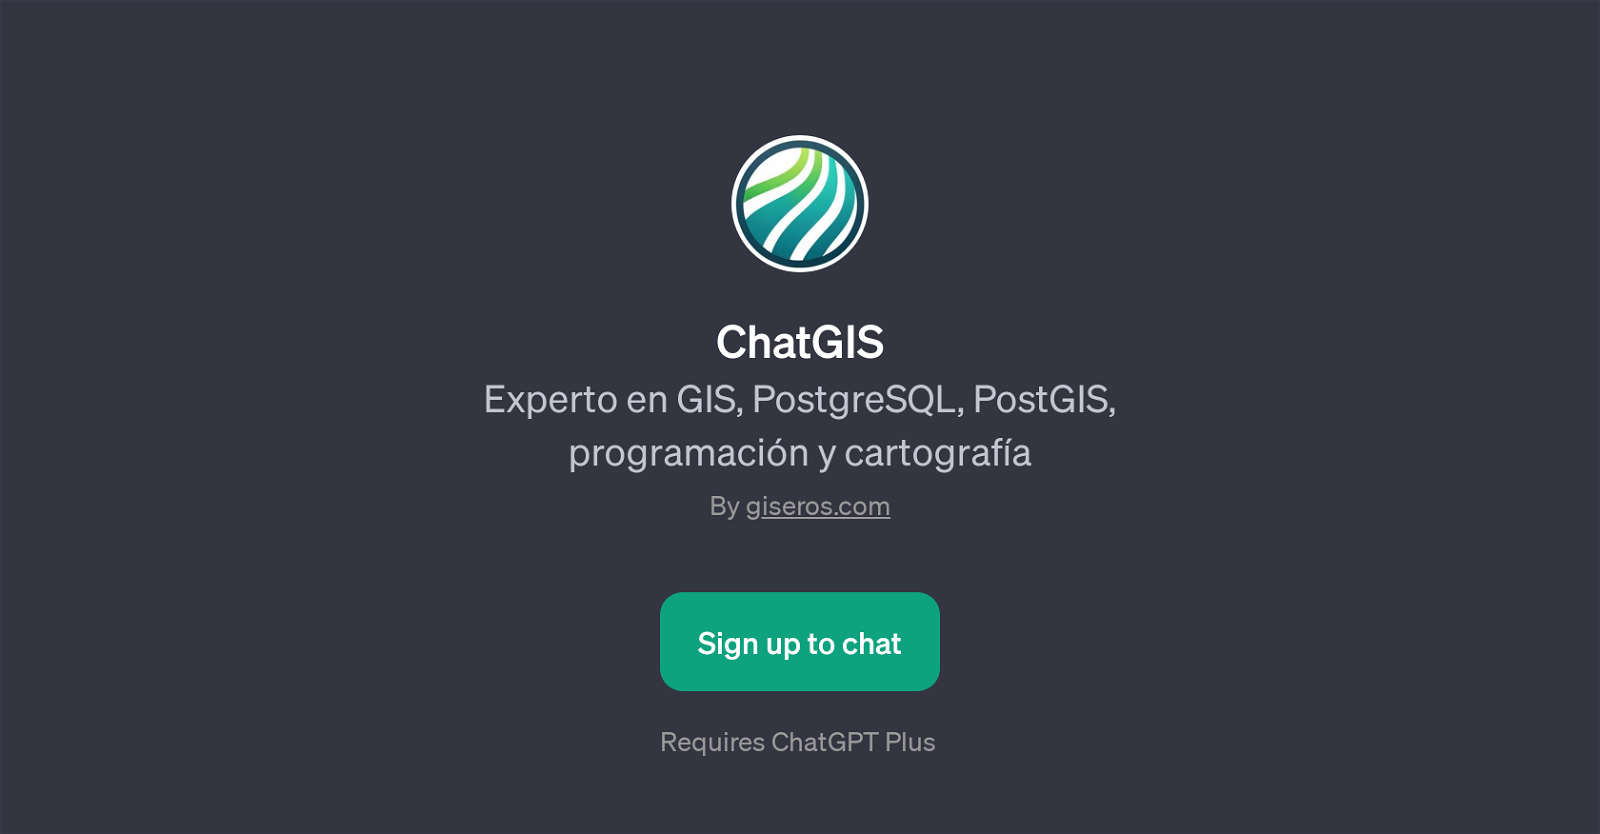 ChatGIS website